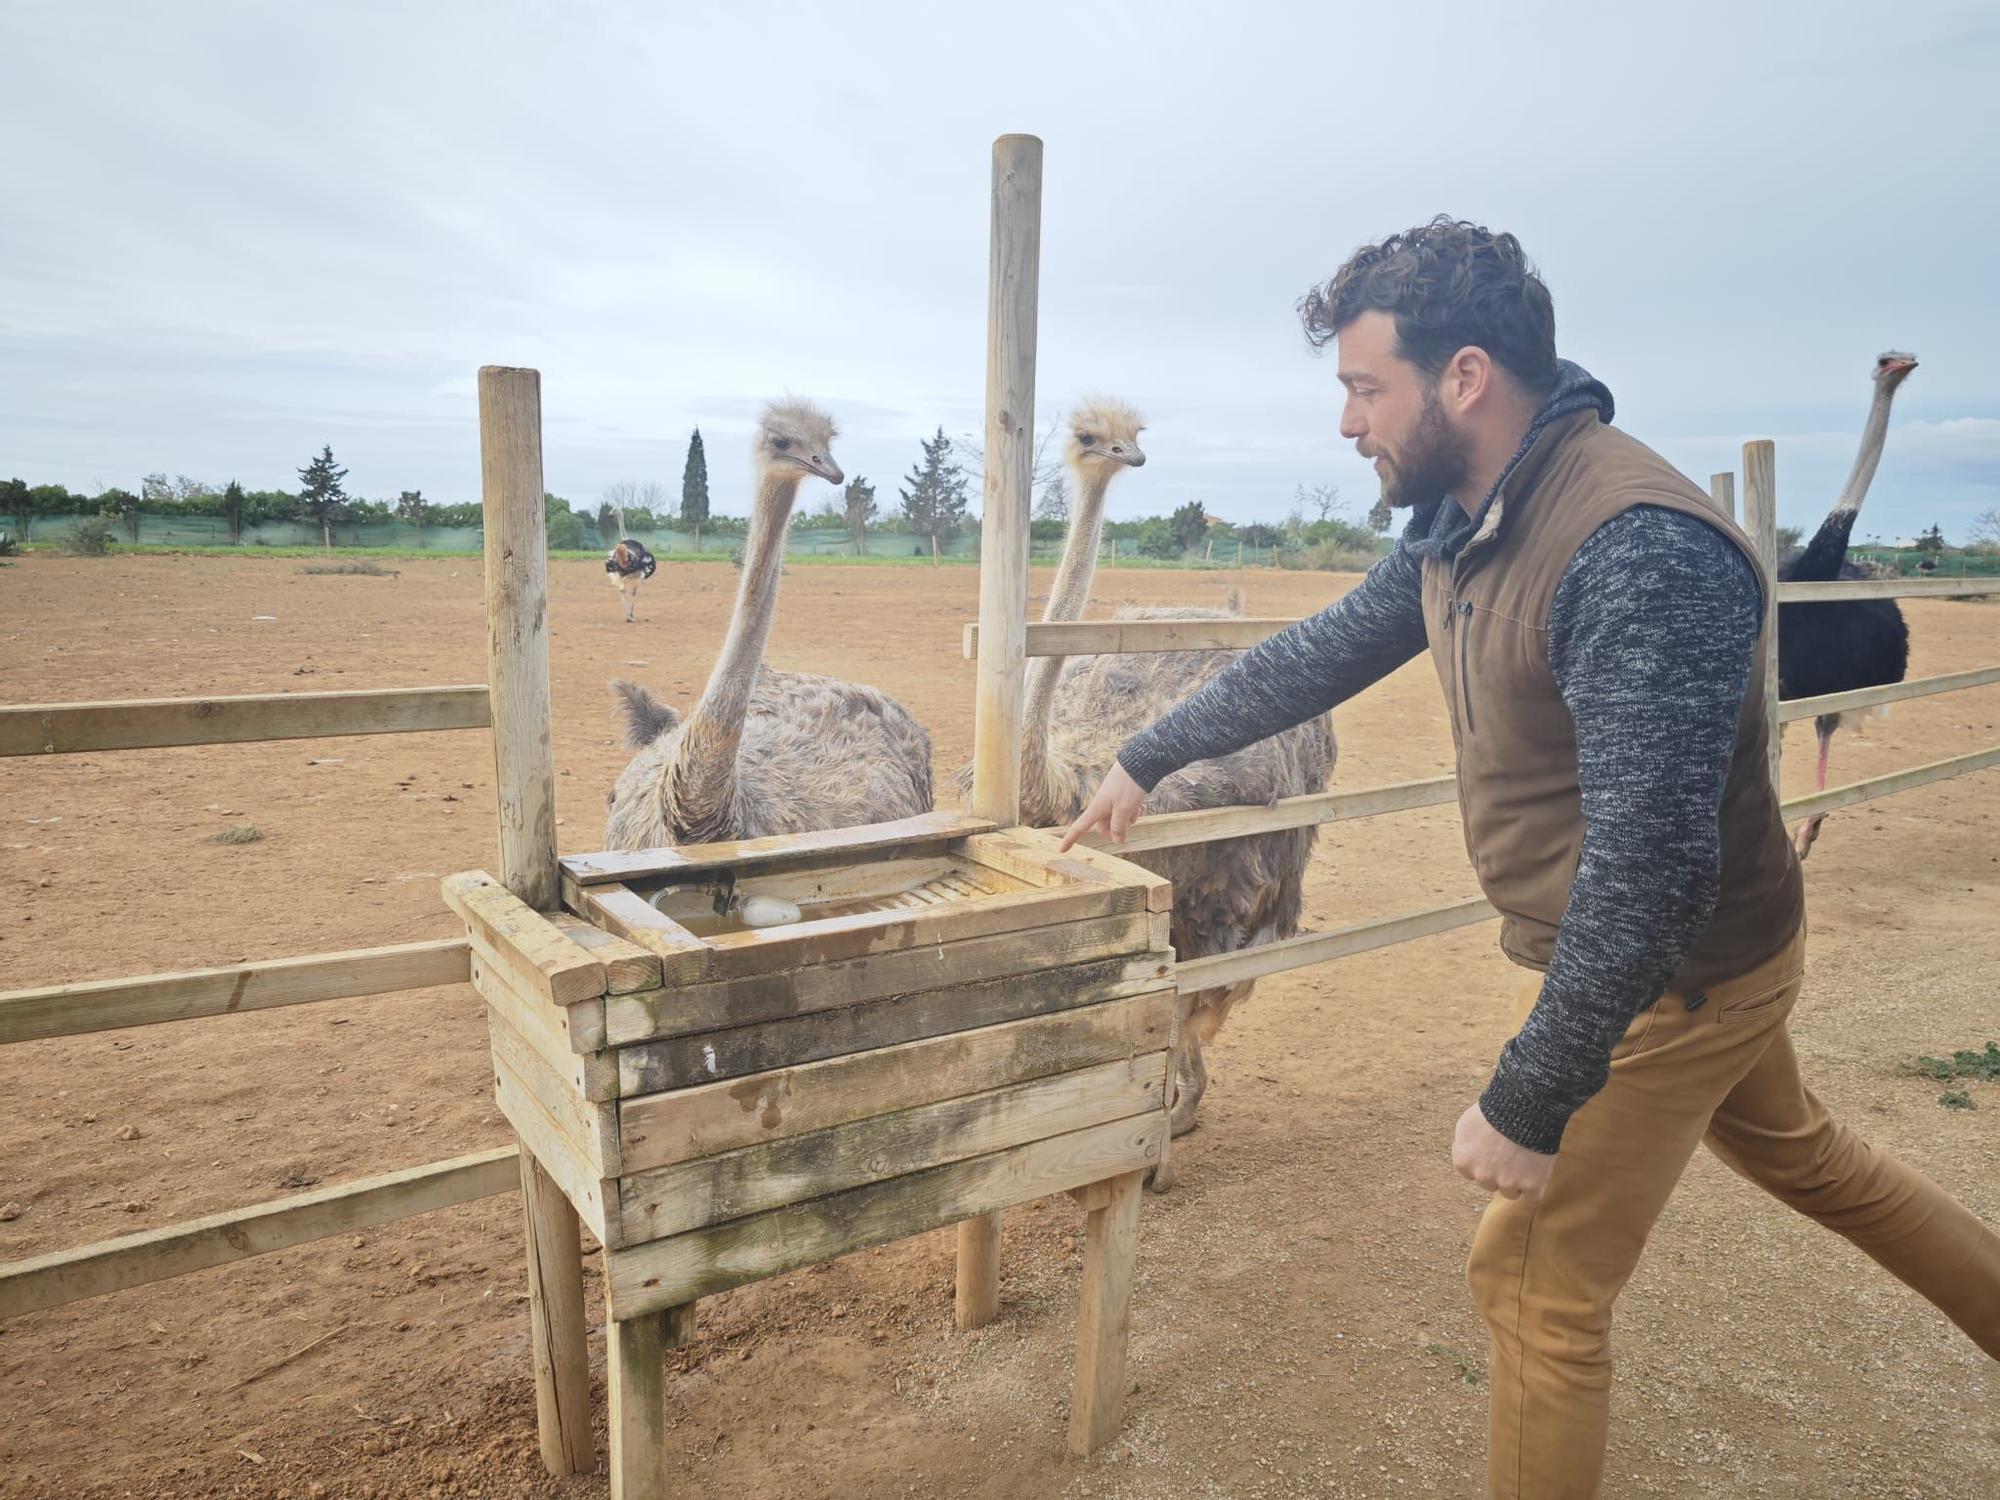 Fotos | La granja de avestruces de Mallorca, en imágenes